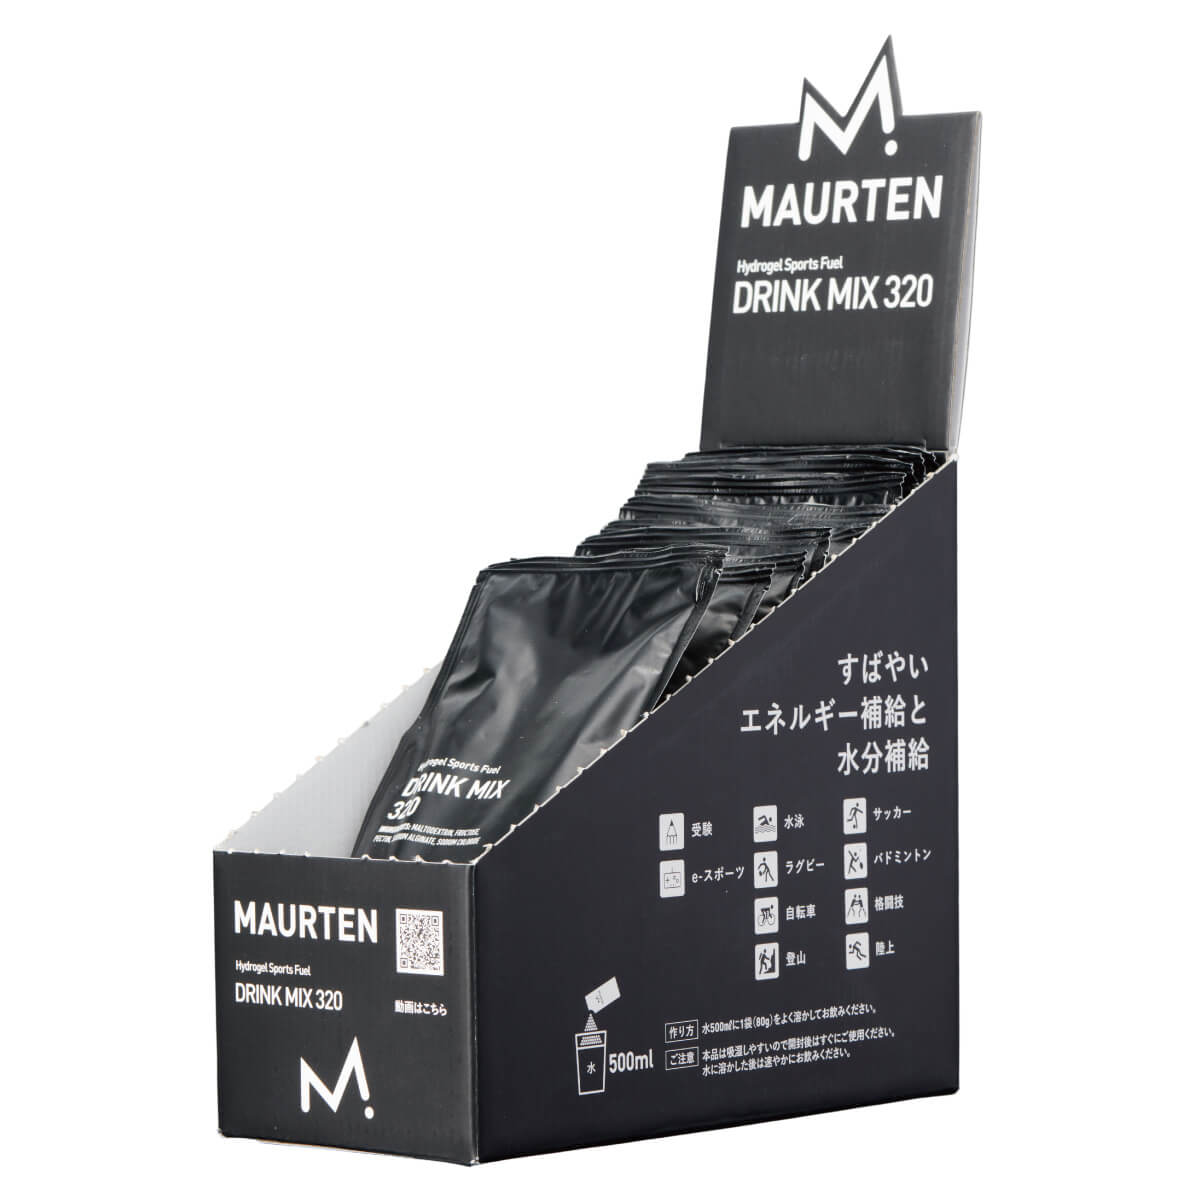 MAURETN DRINK MIX 320 1箱（1袋80g×10袋入） ドリンクミックス 粉末スポーツドリンク ディスプレイ展開イメージ写真